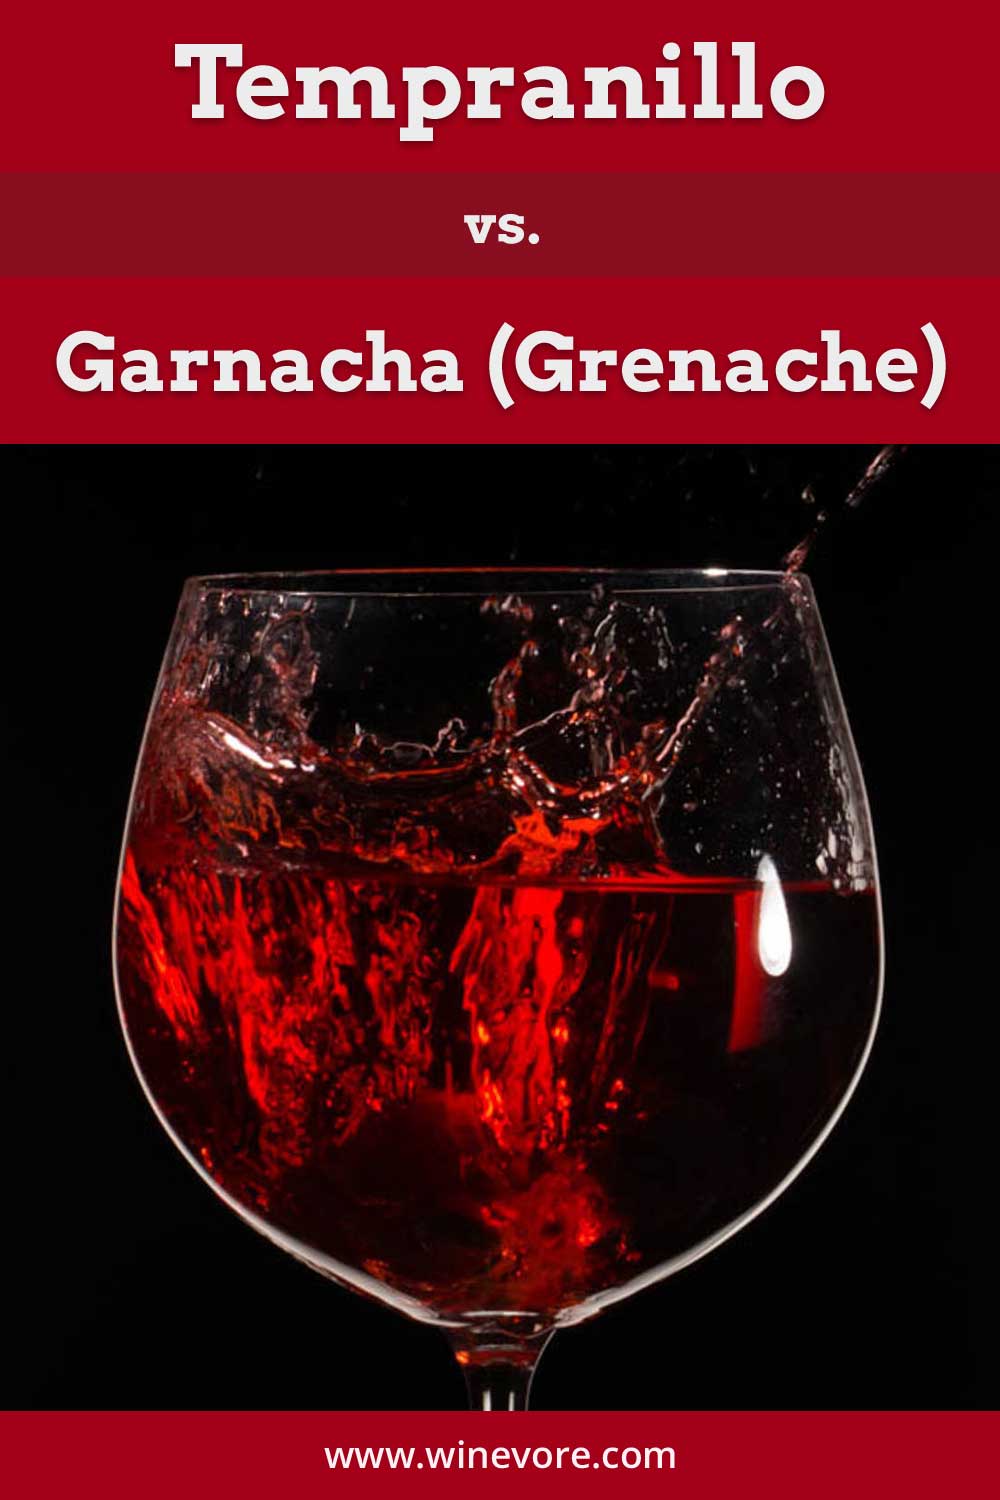 Red wine splashing in a glass - Tempranillo vs. Garnacha (Grenache).